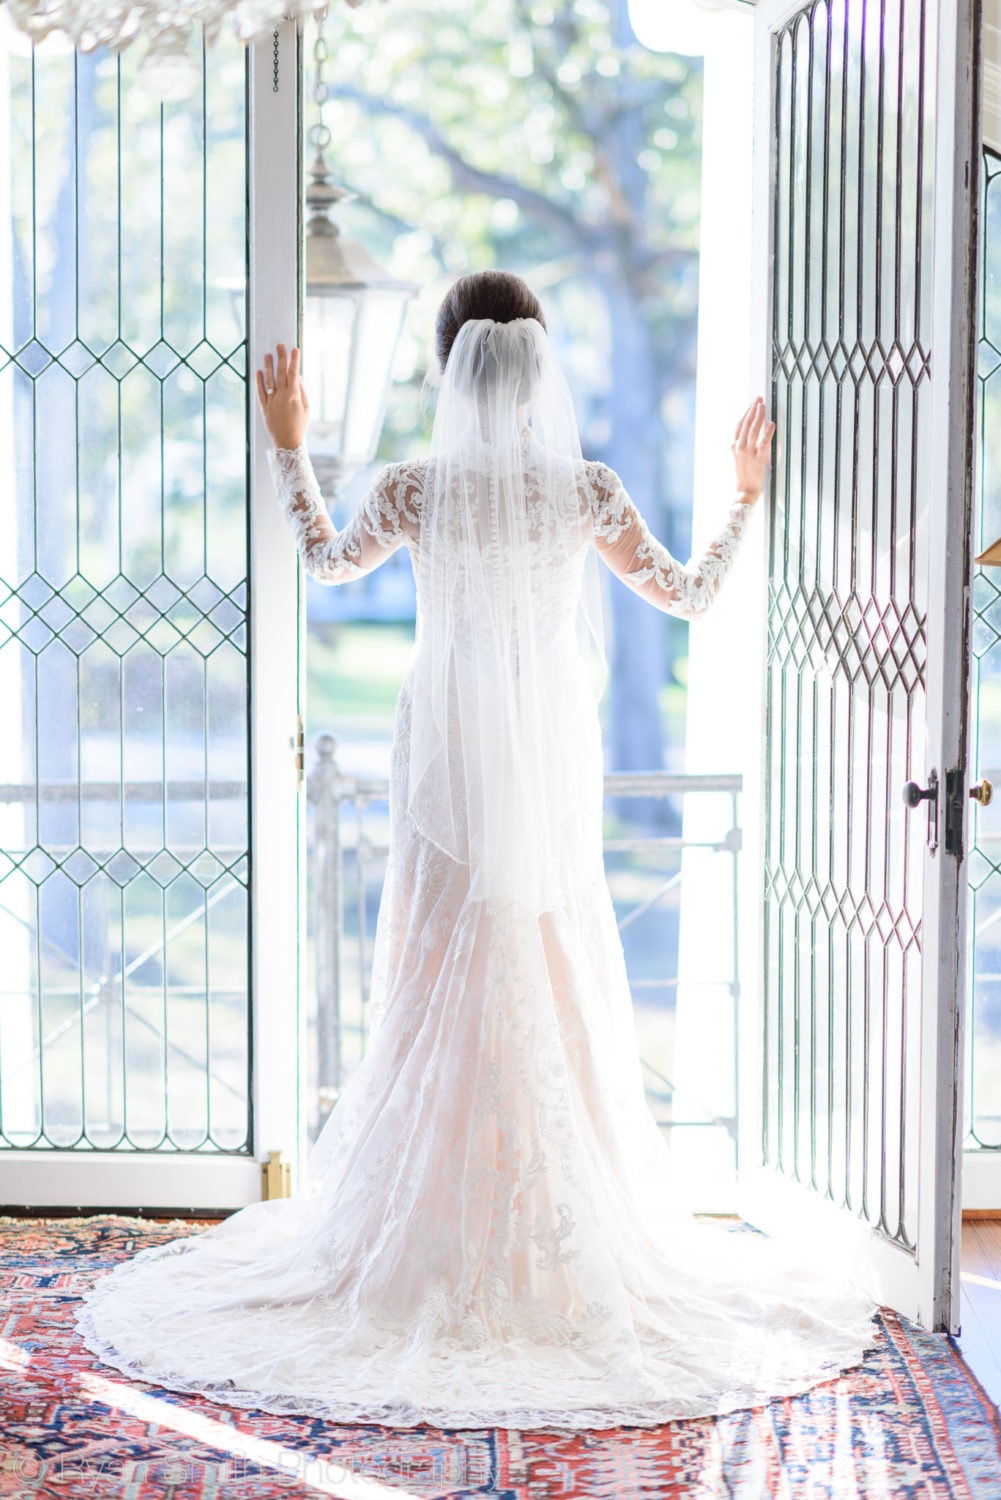 Bride looking out of doorway - Rosewood Manor, Marion